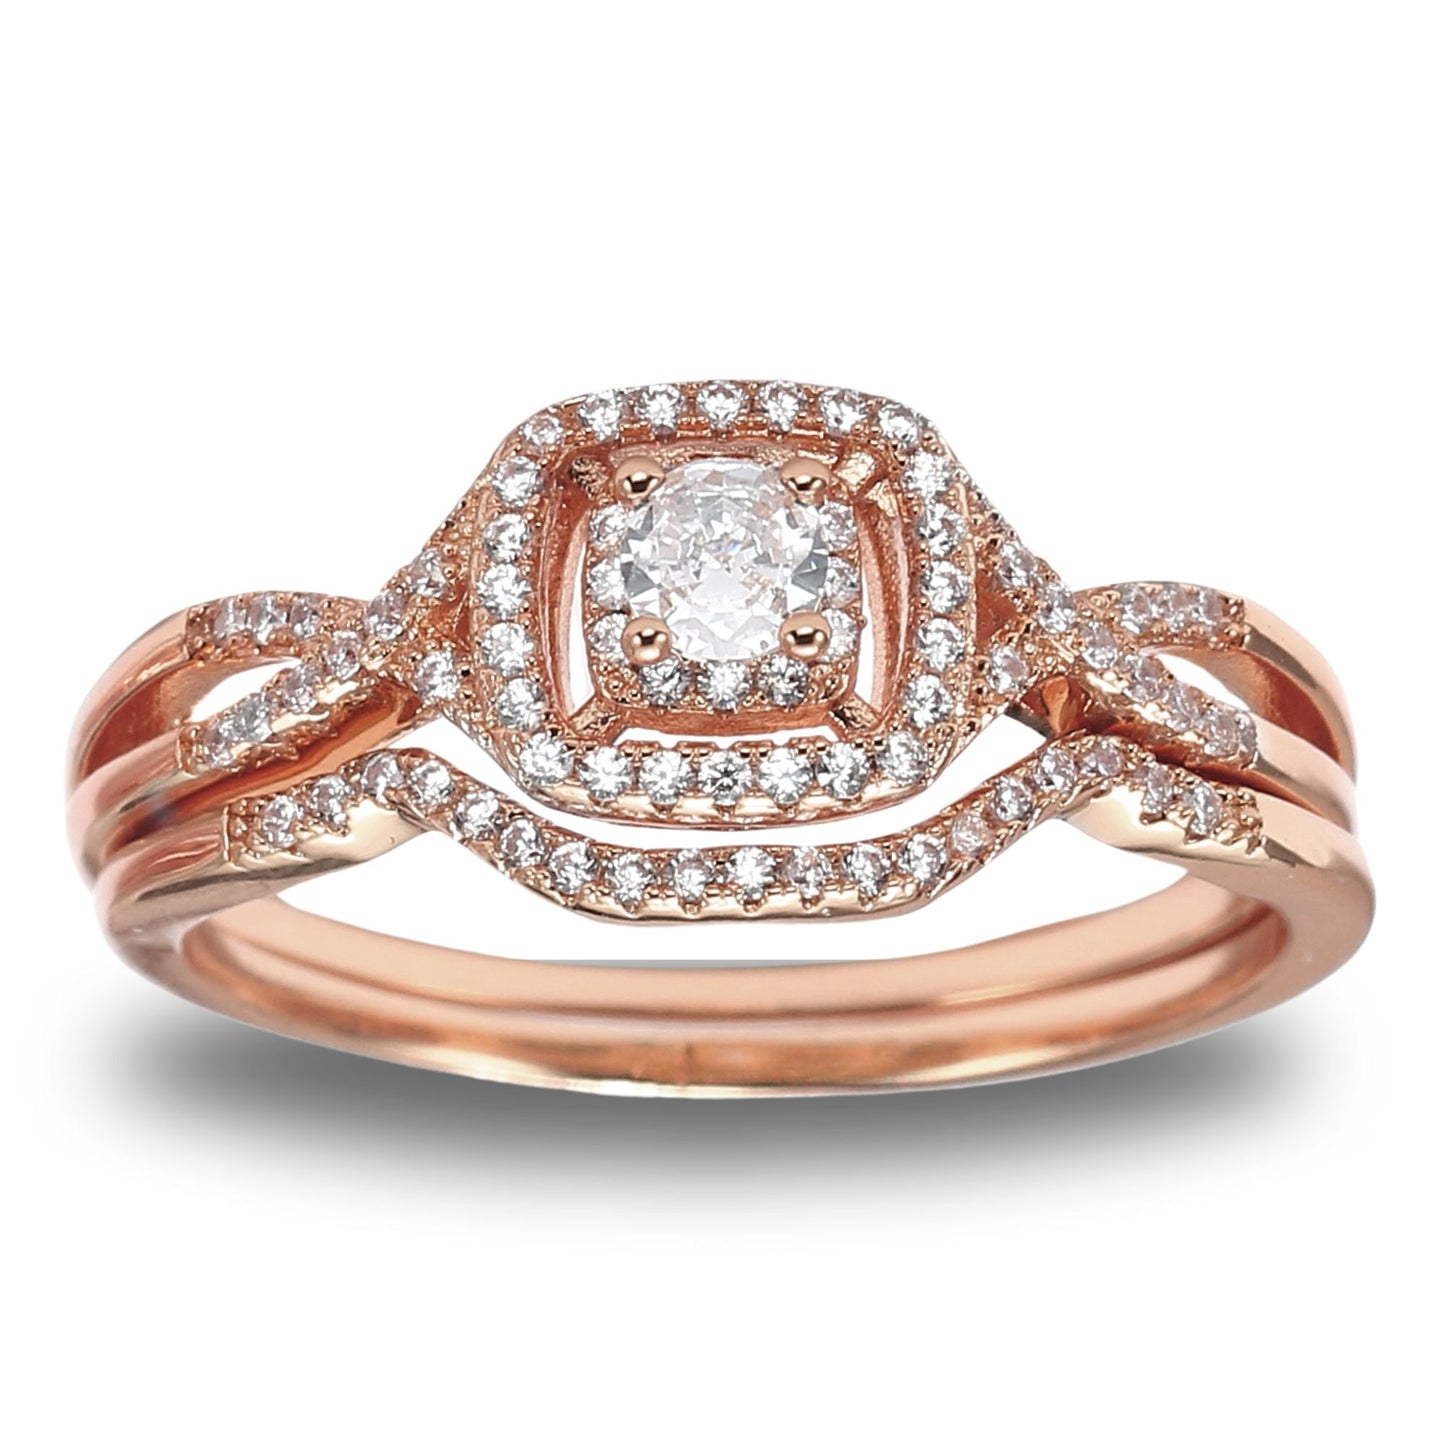 Sterling Silver Wedding Ring Set for Women Halo CZ Rose Gold Engagement Ring Ginger Lyne Collection - Rose Gold/Sterling Silver,6